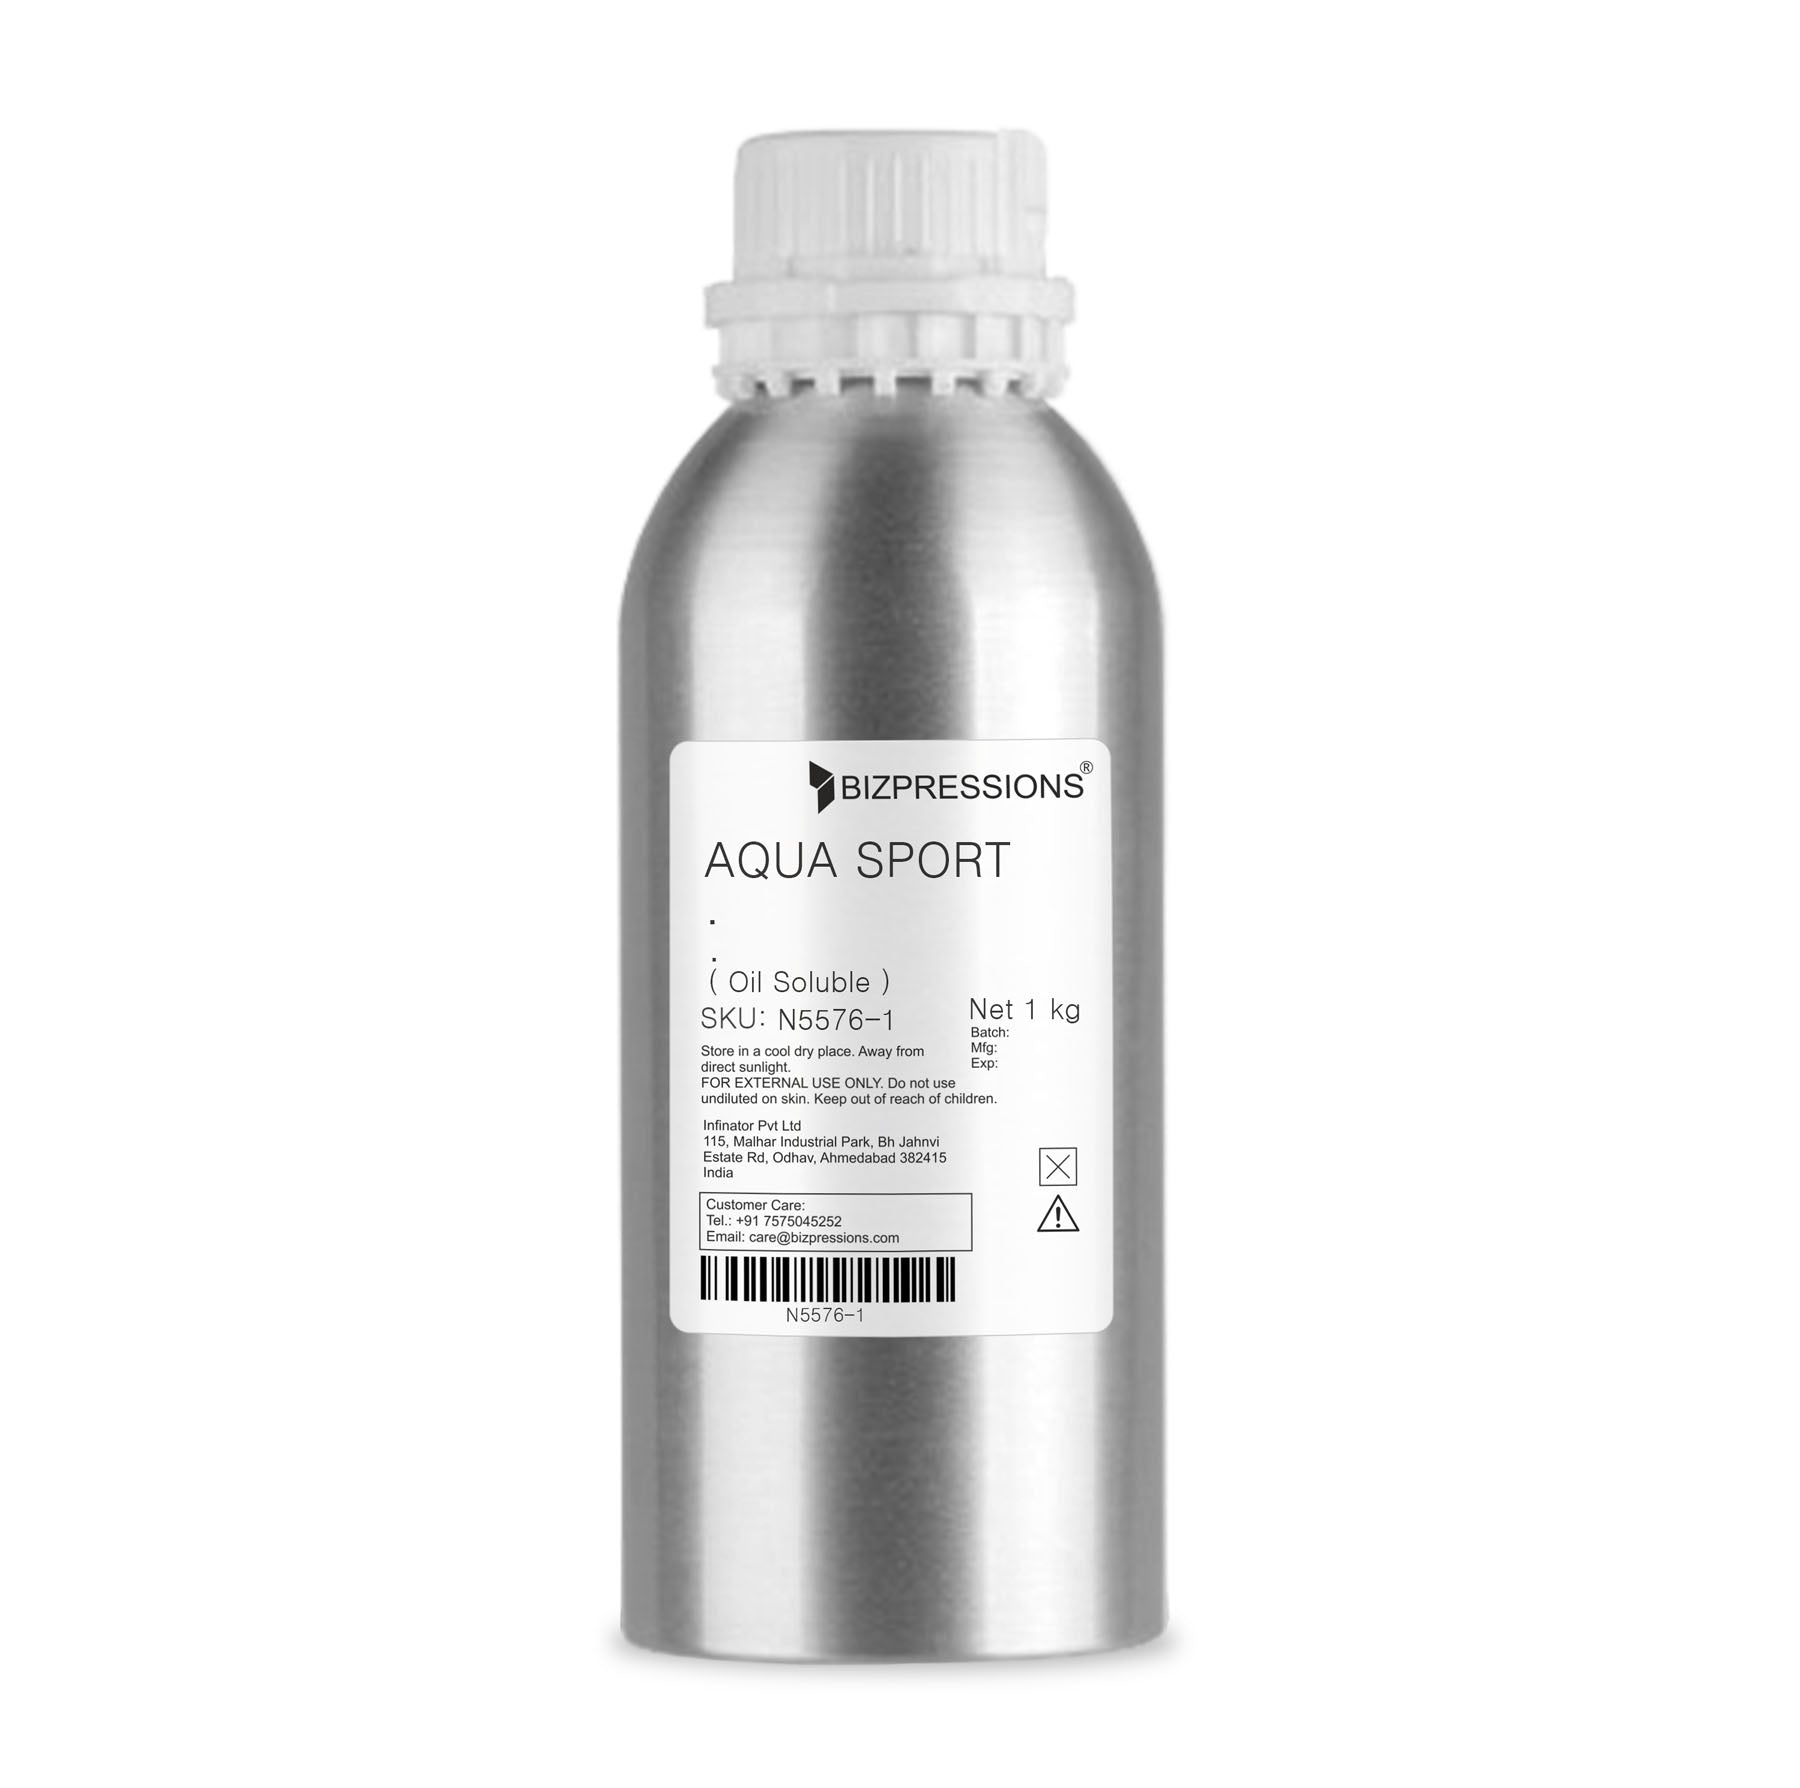 AQUA SPORT - Fragrance ( Oil Soluble ) - 1 kg